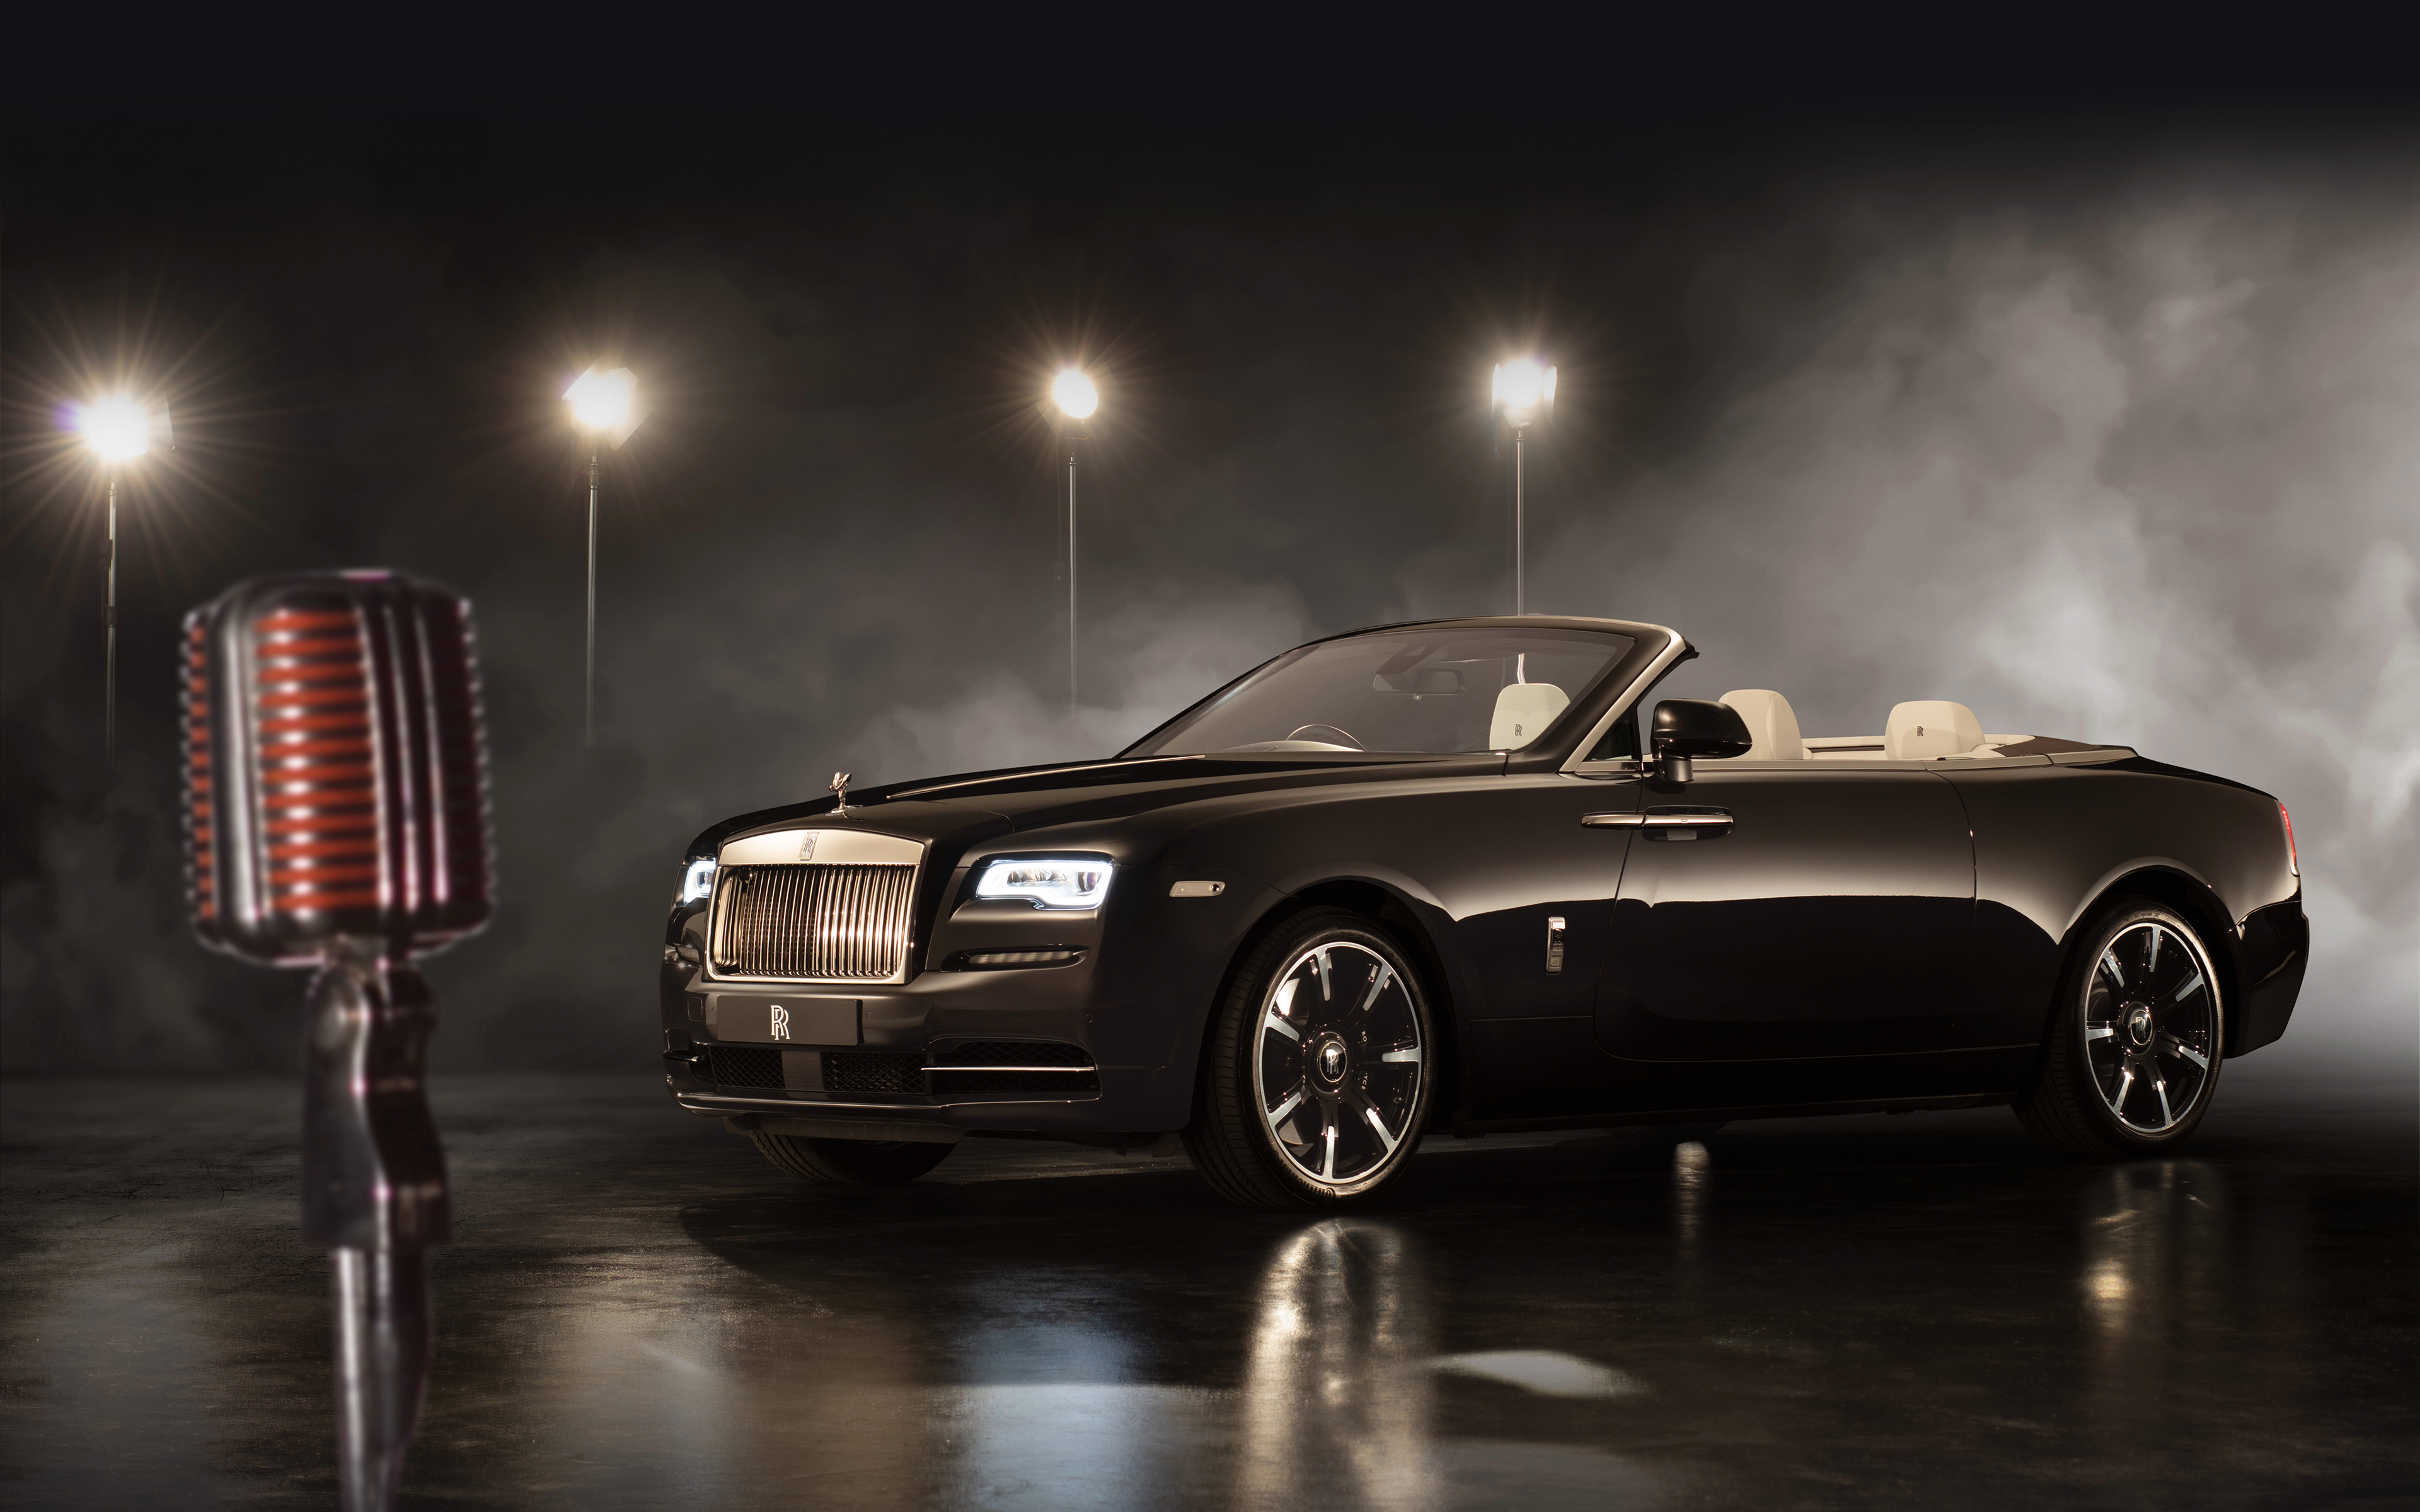 HD desktop wallpaper: Rolls Royce, Car, Vehicles, Black Car, Rolls Royce  Dawn download free picture #434172